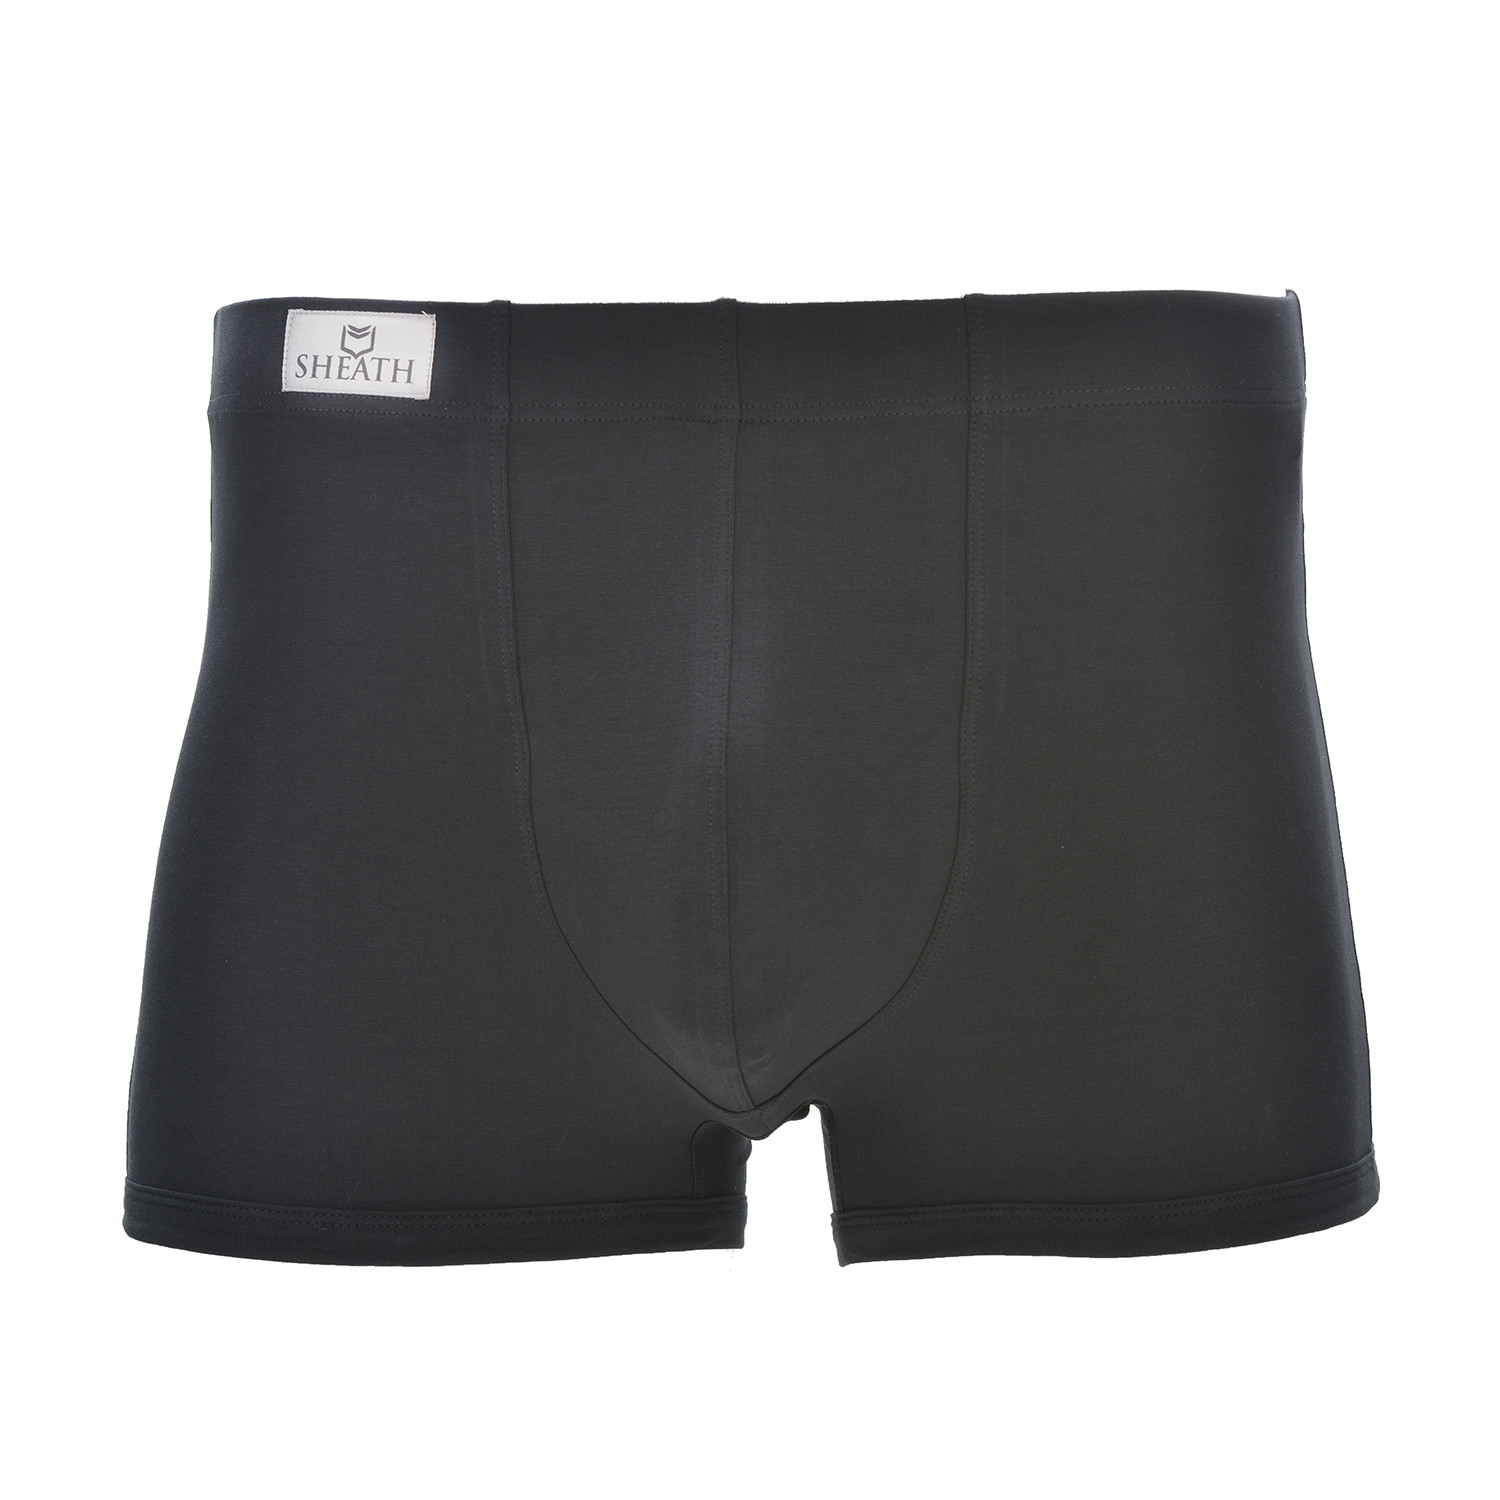 Sheath 2.0 // Ninja Black (Small) - Sheath Underwear - Touch of Modern